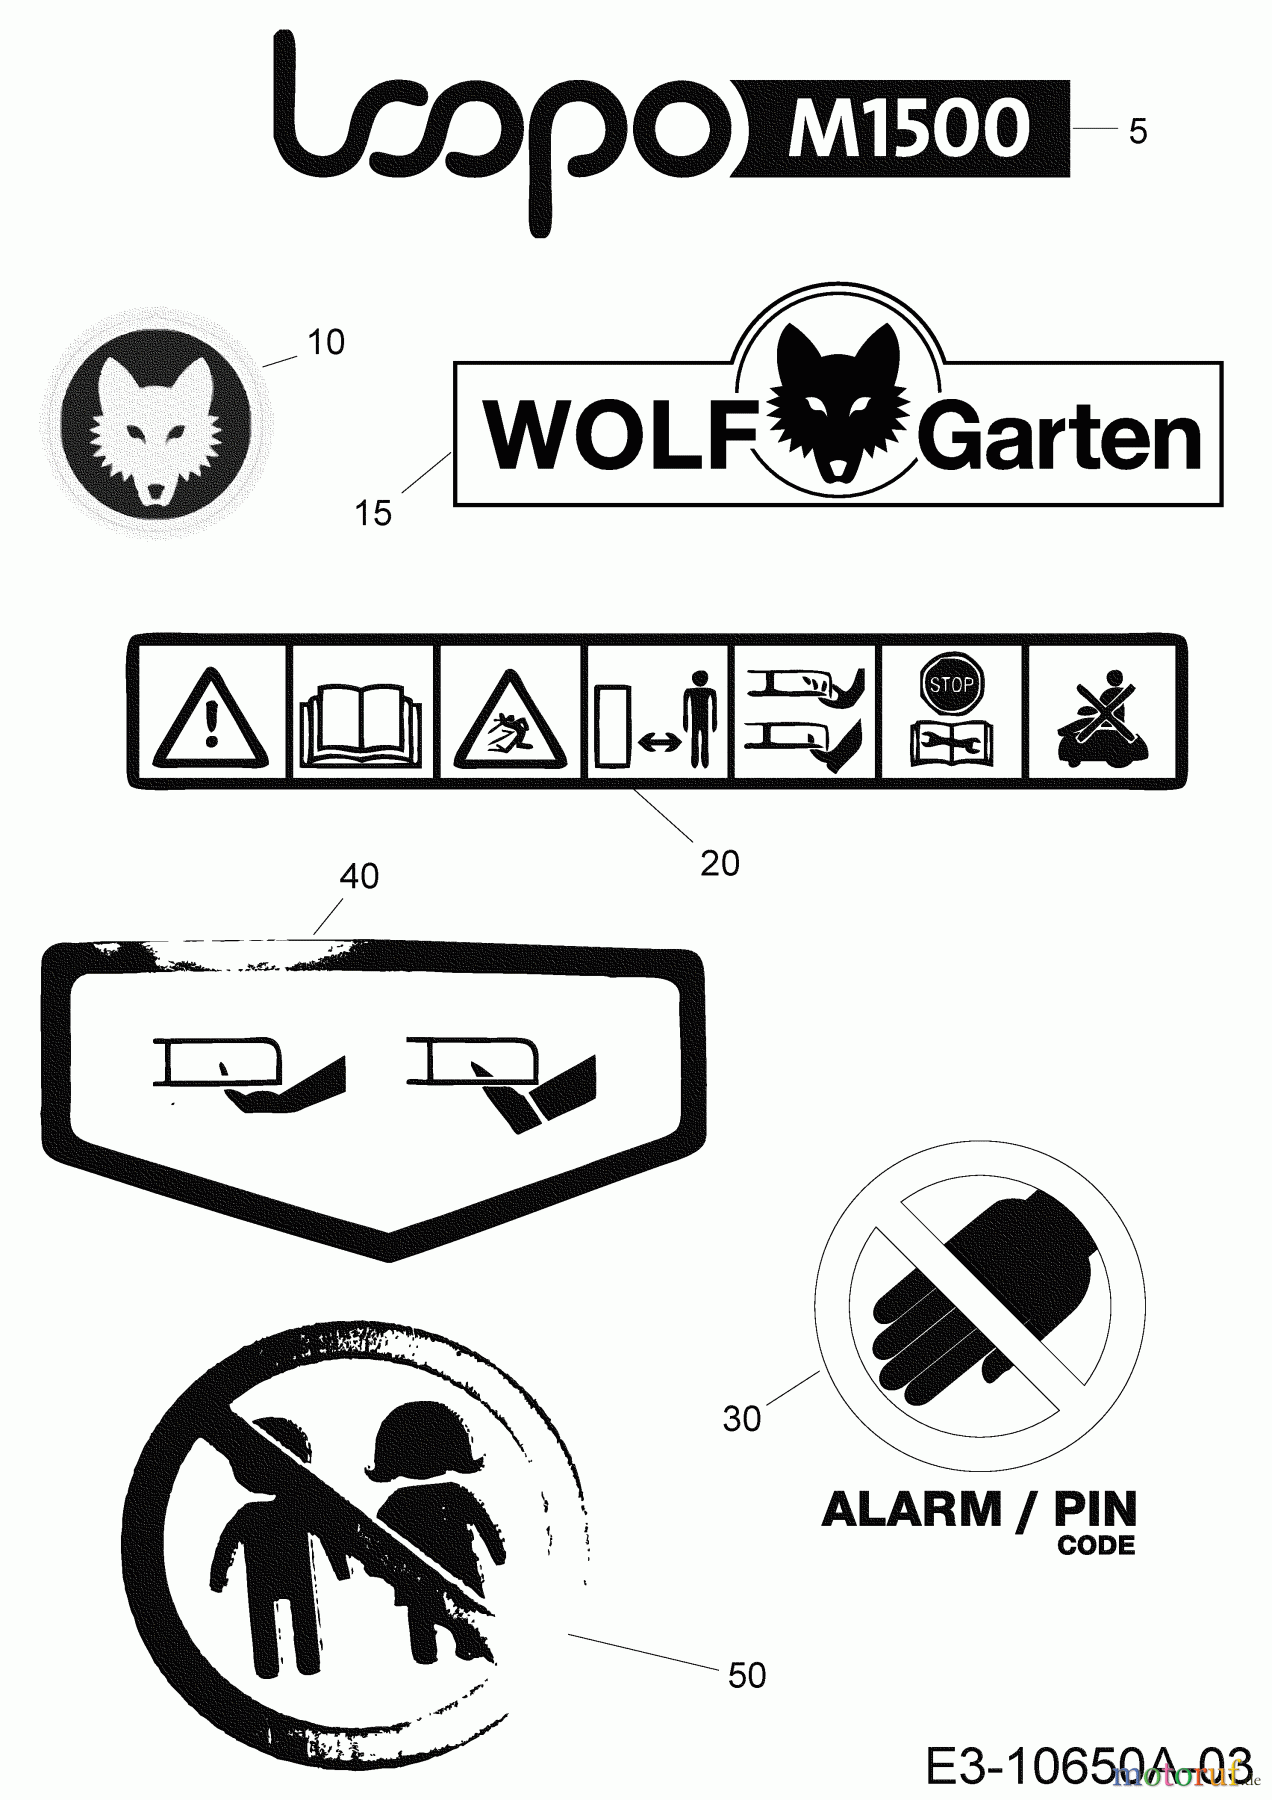  Wolf-Garten Mähroboter Loopo M1500 22BCDAEA650  (2019) Aufkleber